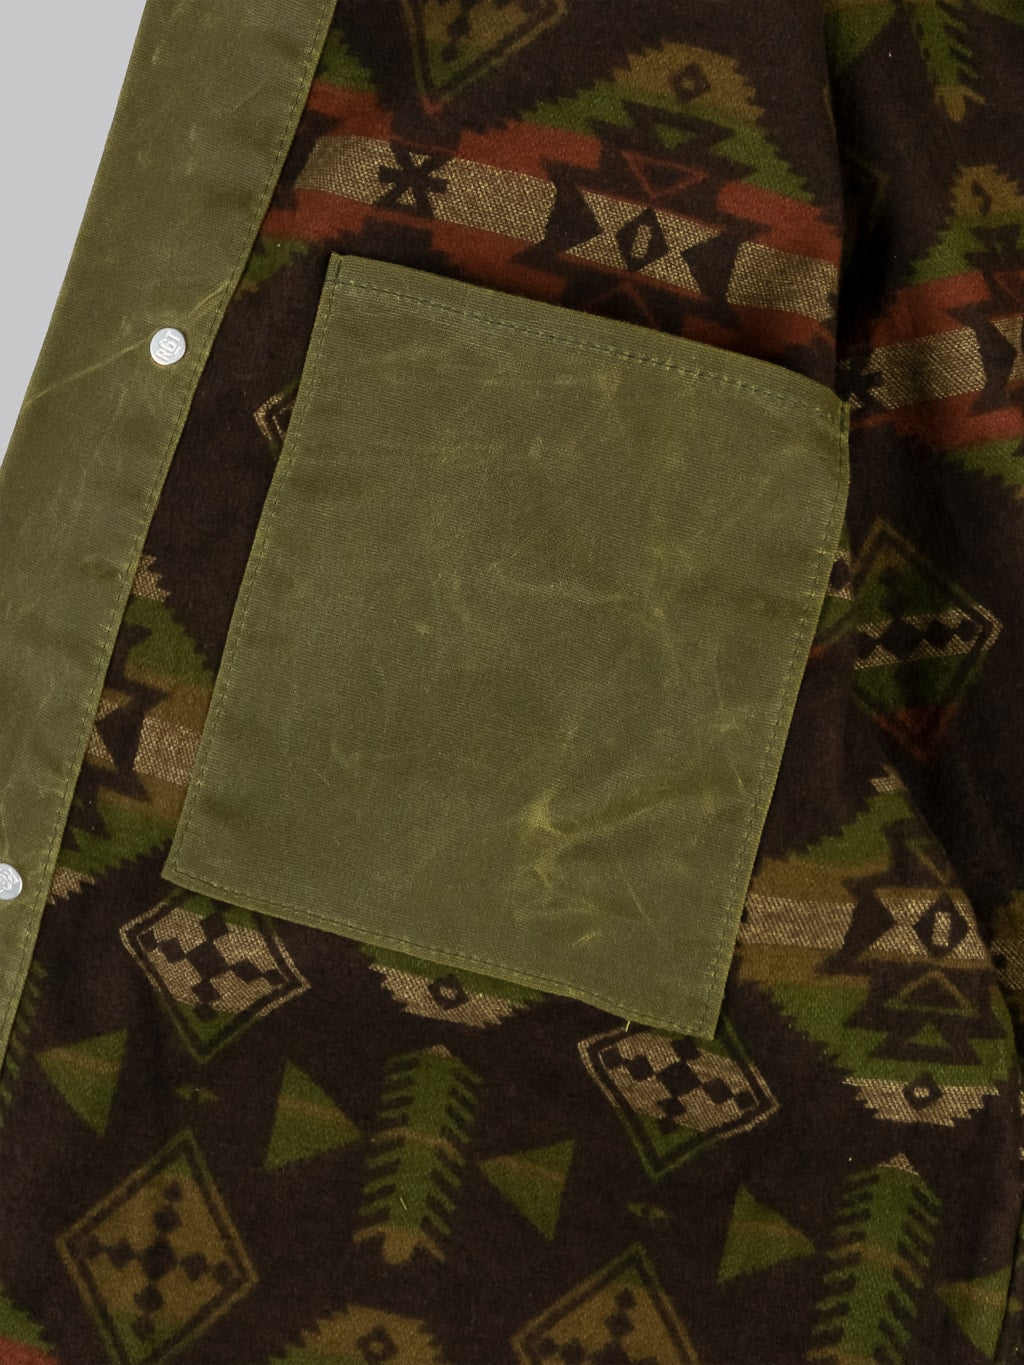 Rogue Territory Supply Jacket Lined Hunter Green Ridgeline interior pocket inner fabric